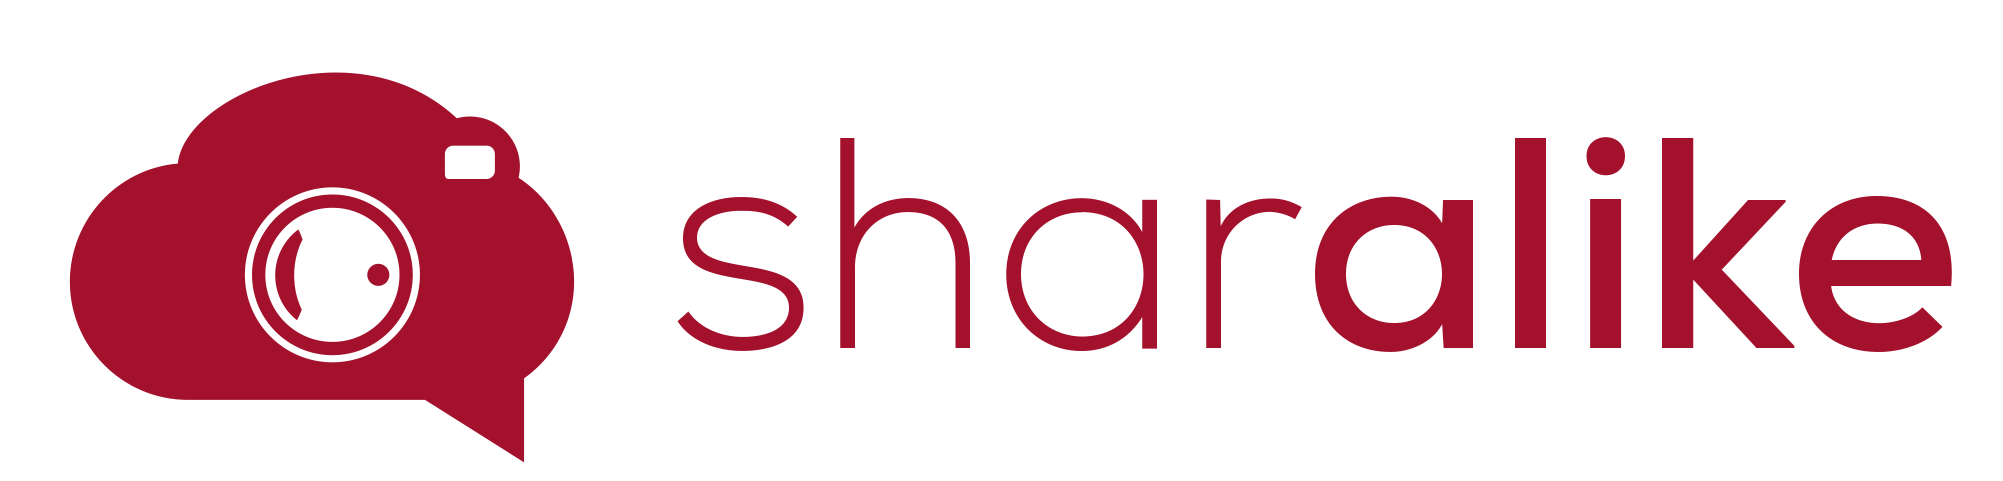 Sharalike-logo